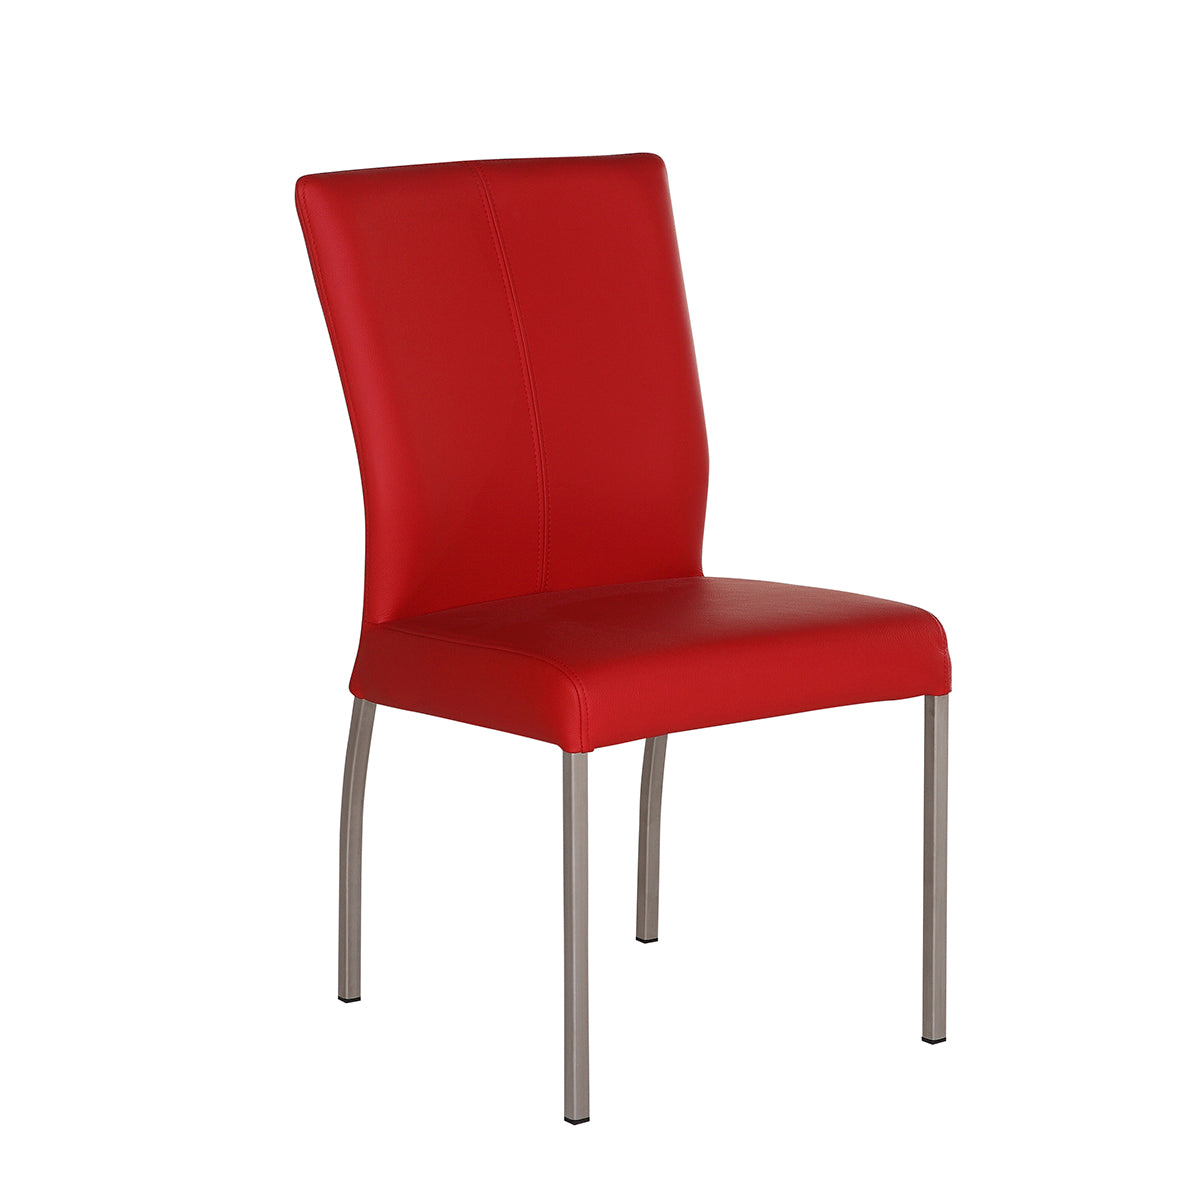 Just Ciro spisebordsstol i rød taurus læder.